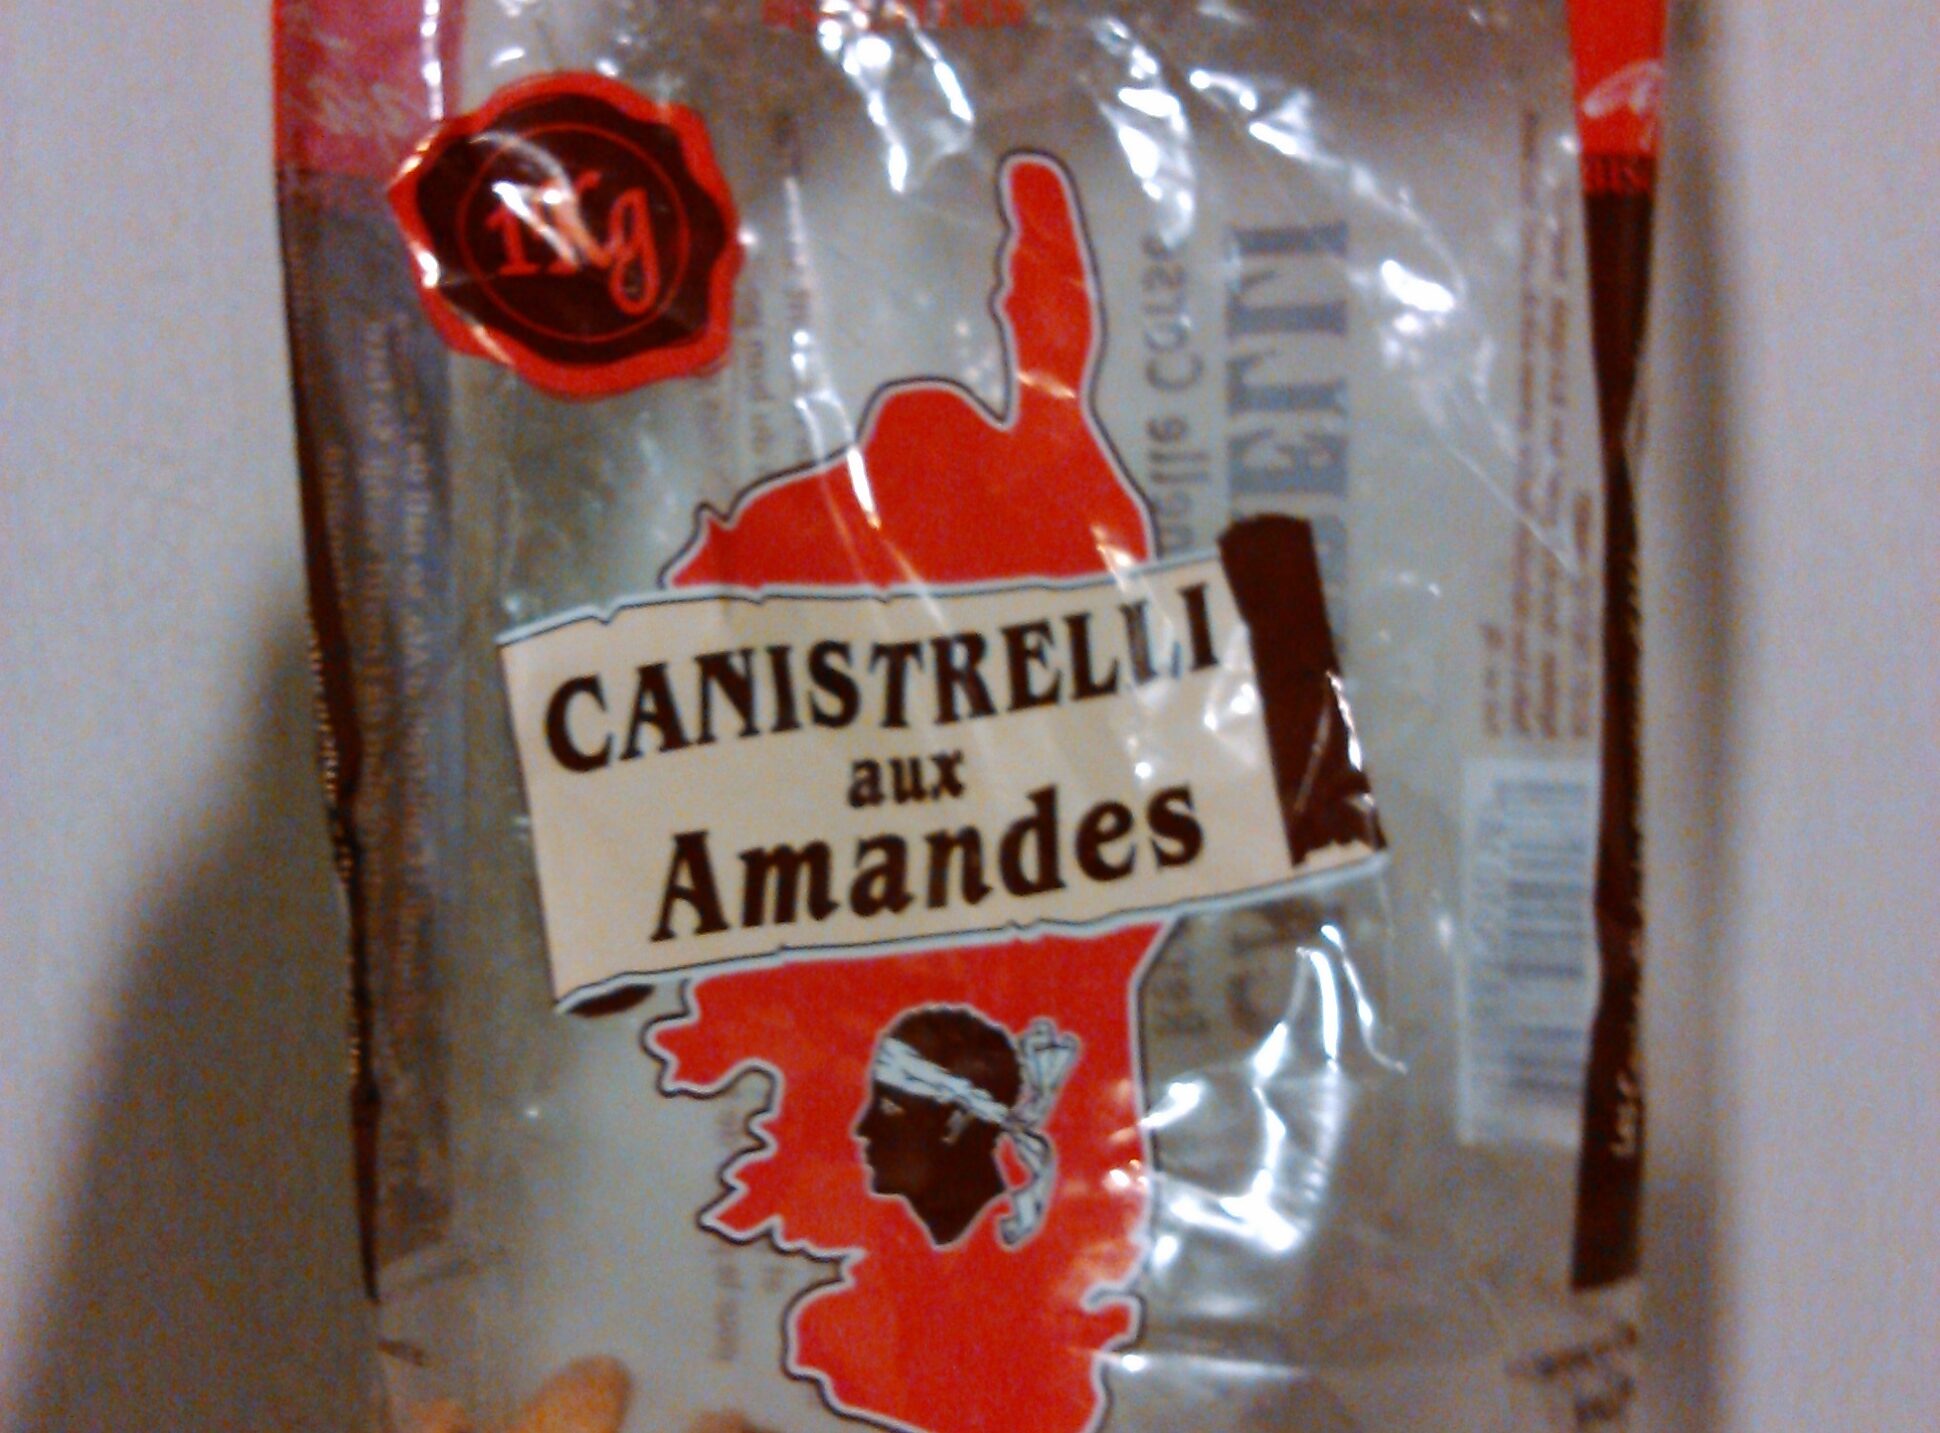 Canistrelli aux Amandes - Product - fr